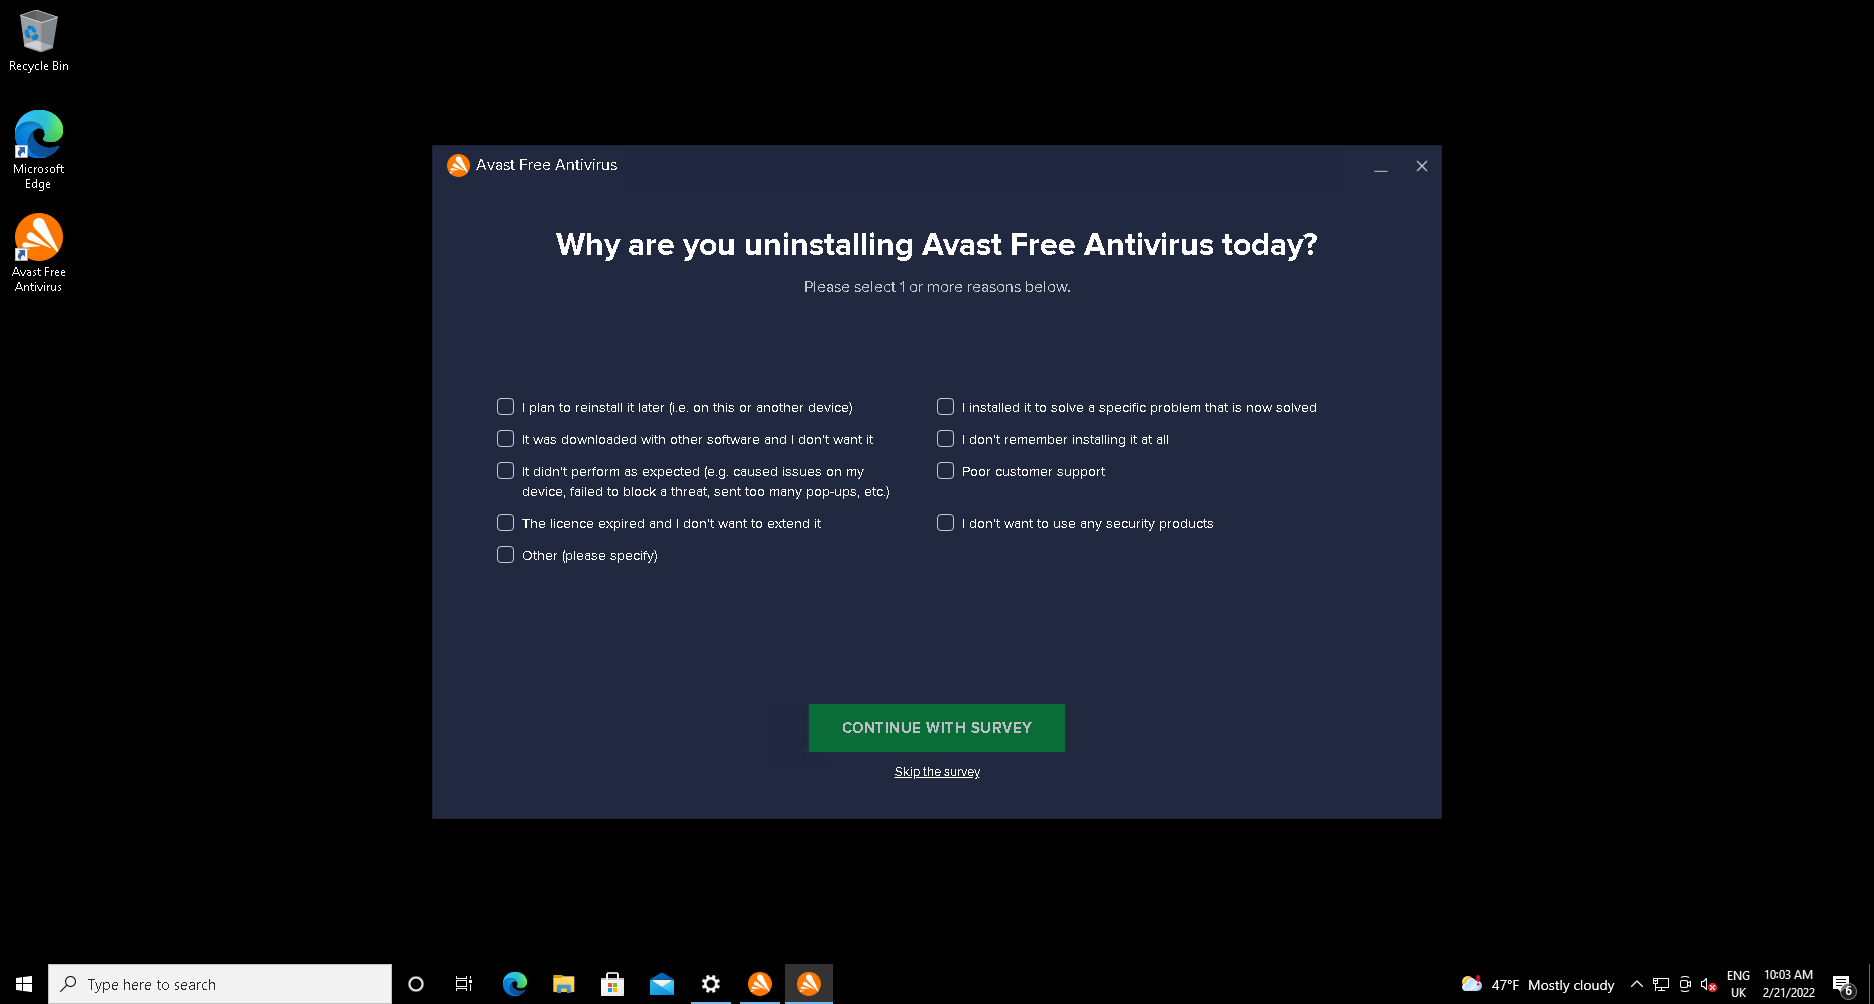 The Avast uninstallation survey is optional